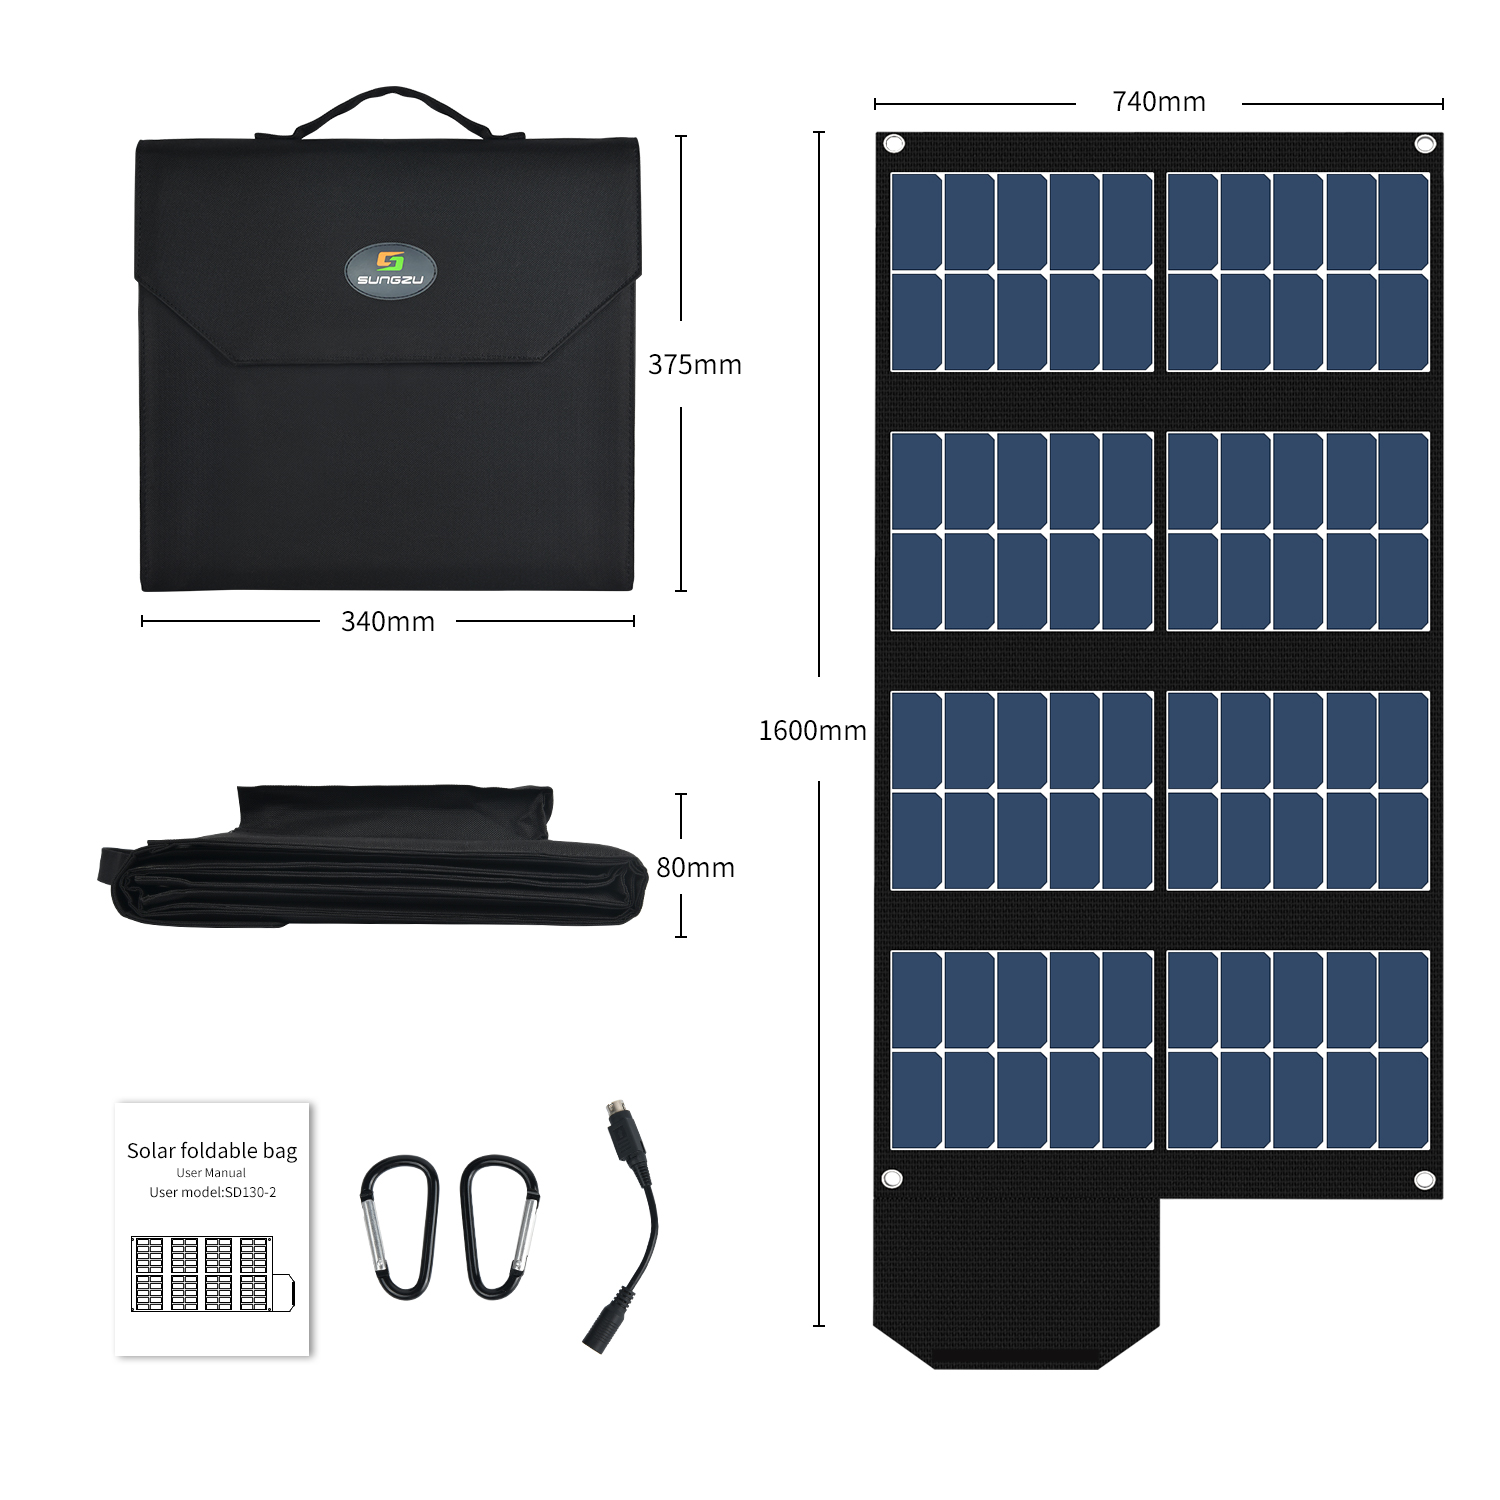 130W portable solar panel | Bank Solar & Power Sungzu Charger